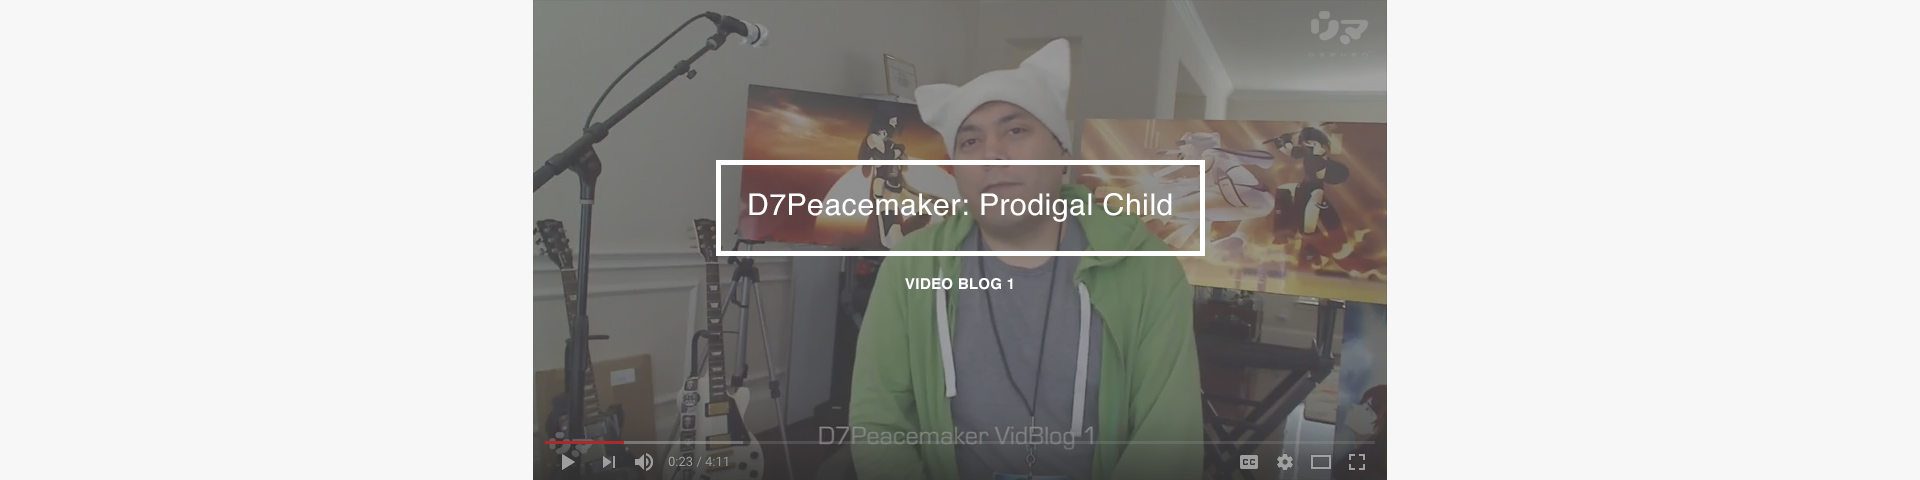 D7Peacemaker - Prodigal Child